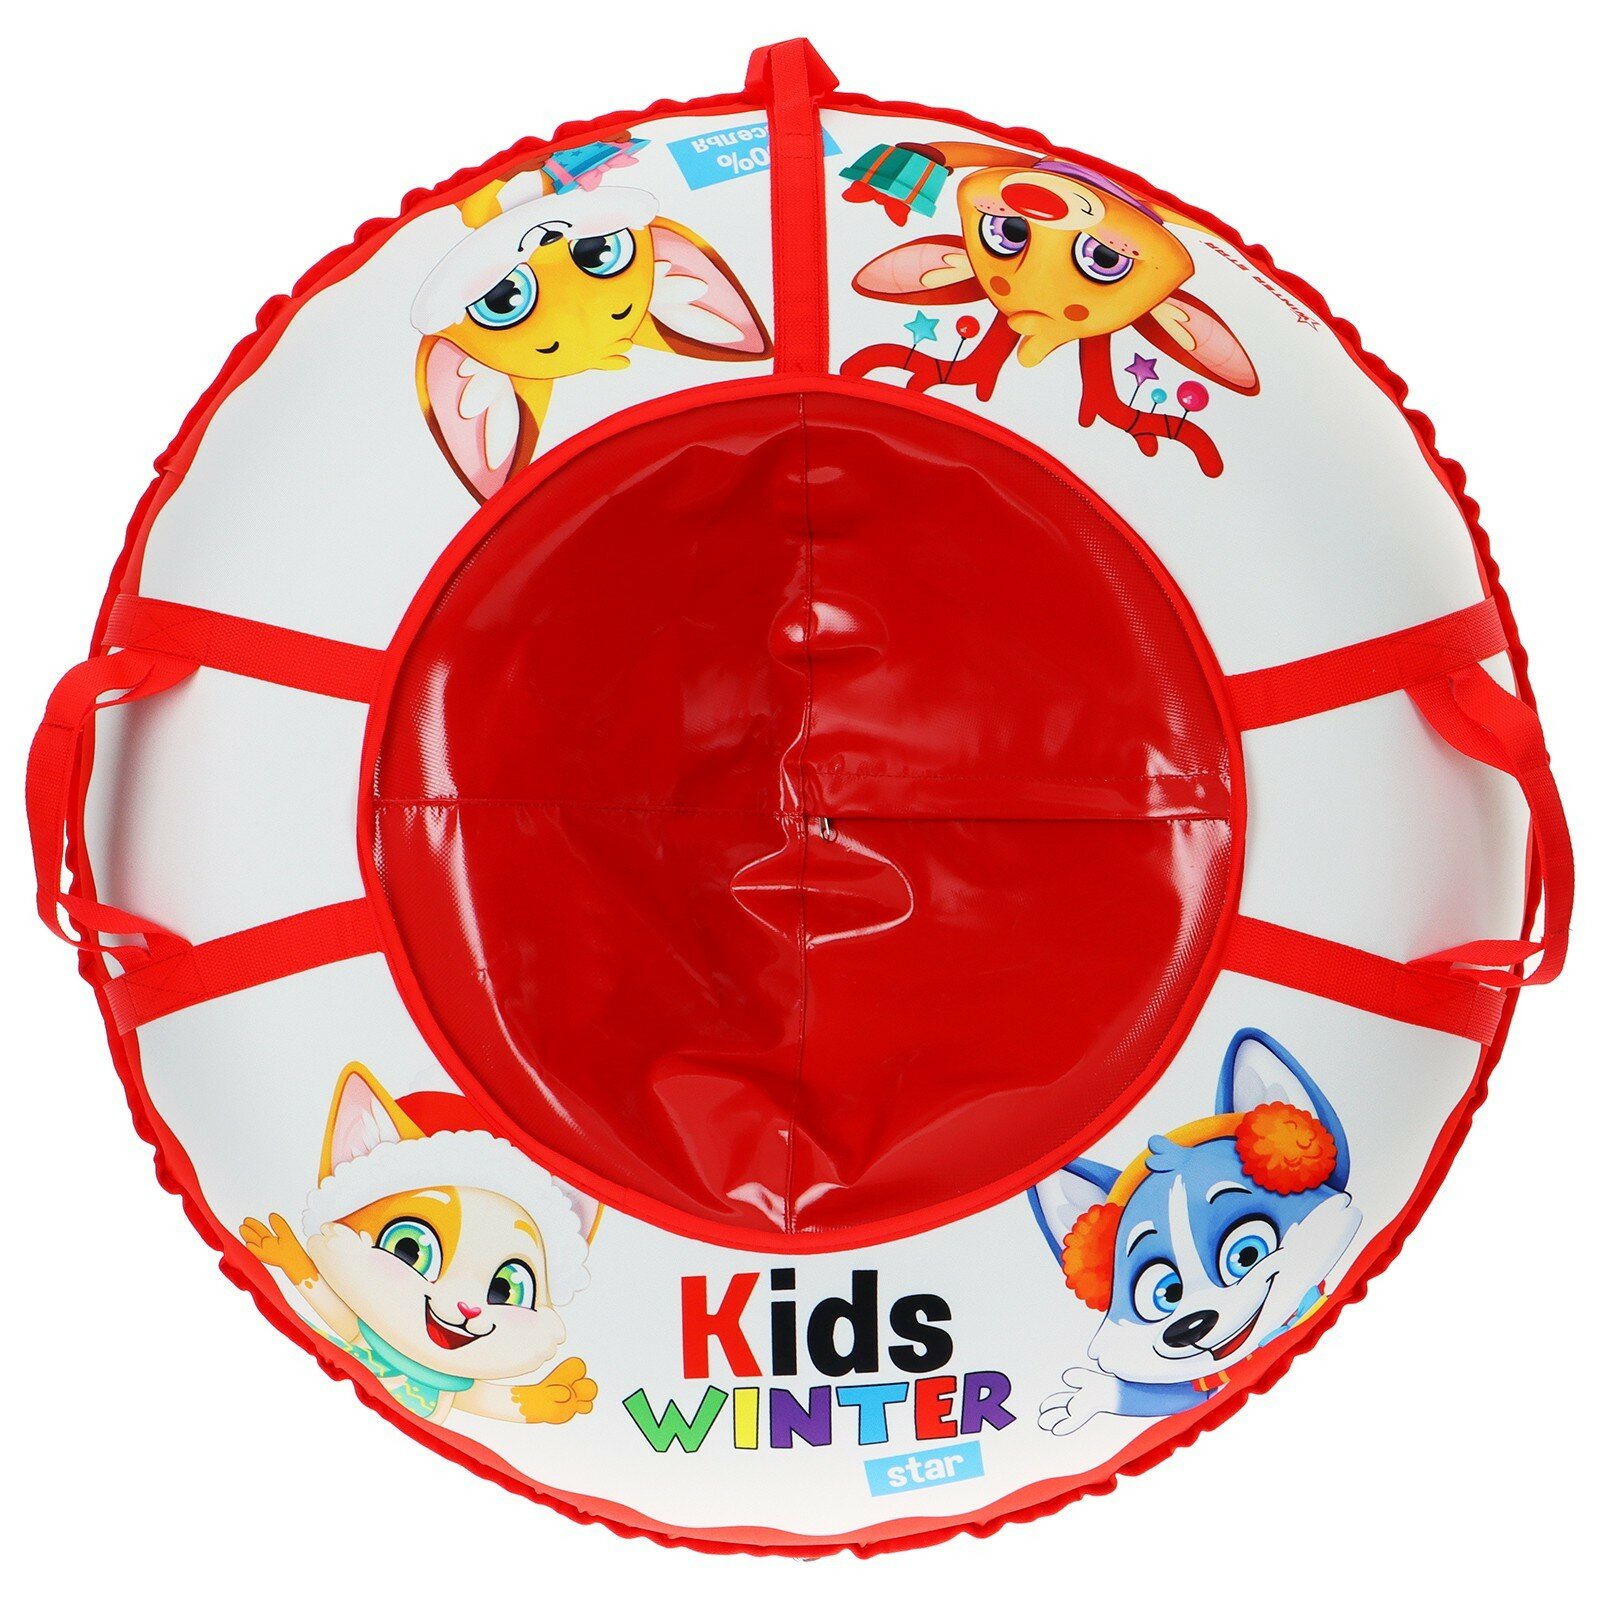 Тюбинг-ватрушка Winter Star Kids, диаметр чехла 93 см, цвет красный